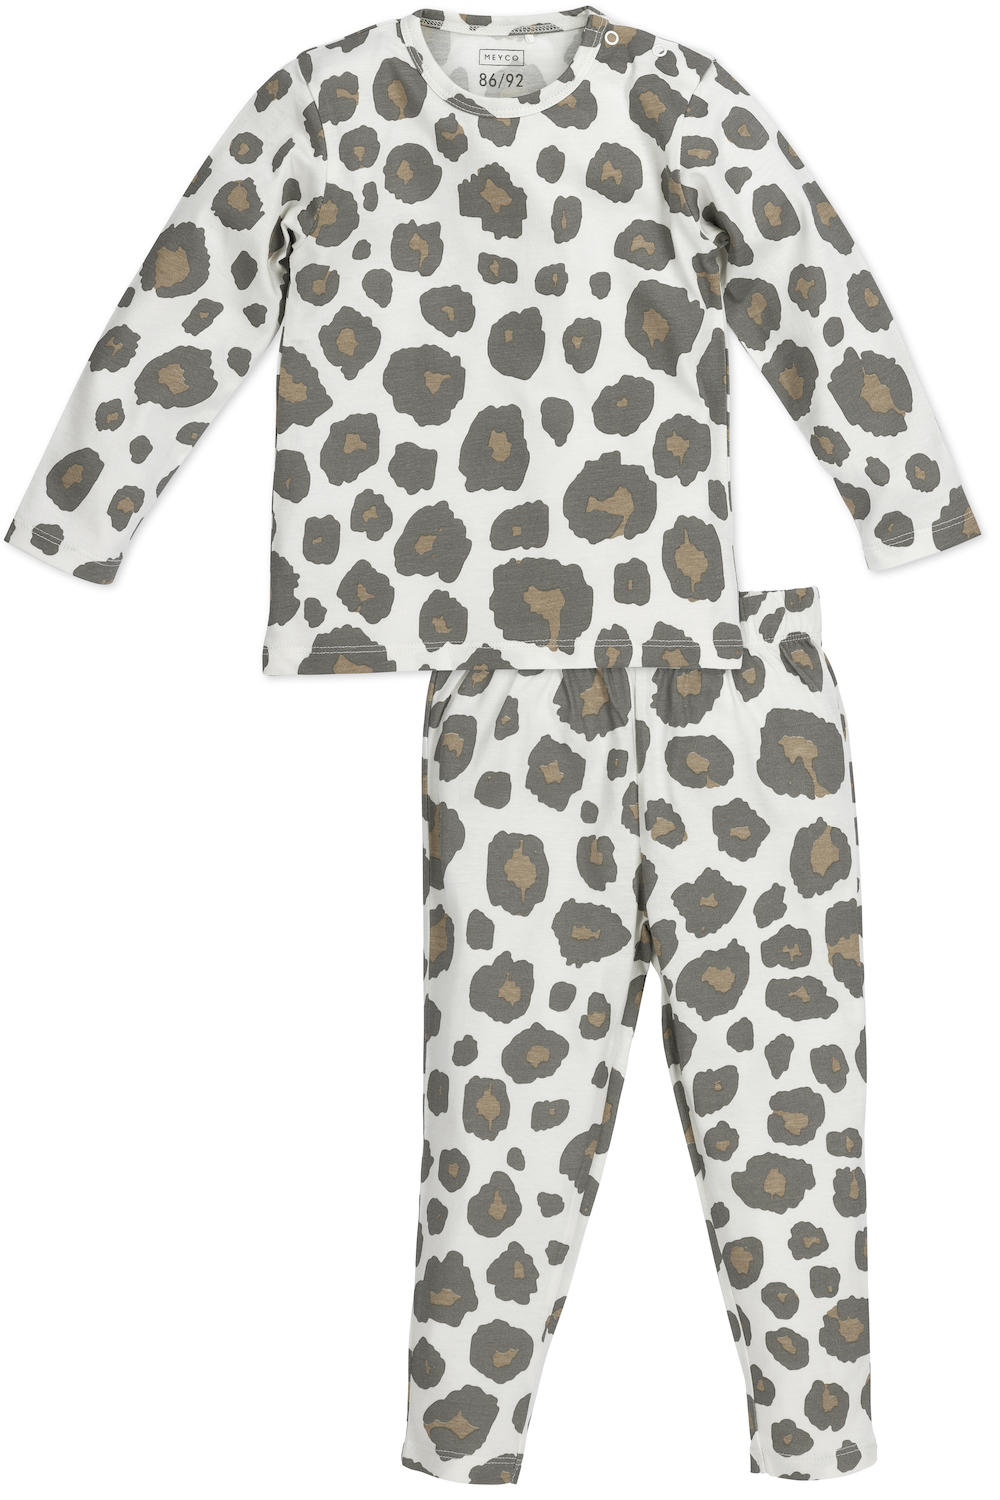 Pyjama Panter - Neutral - Größe 86/92